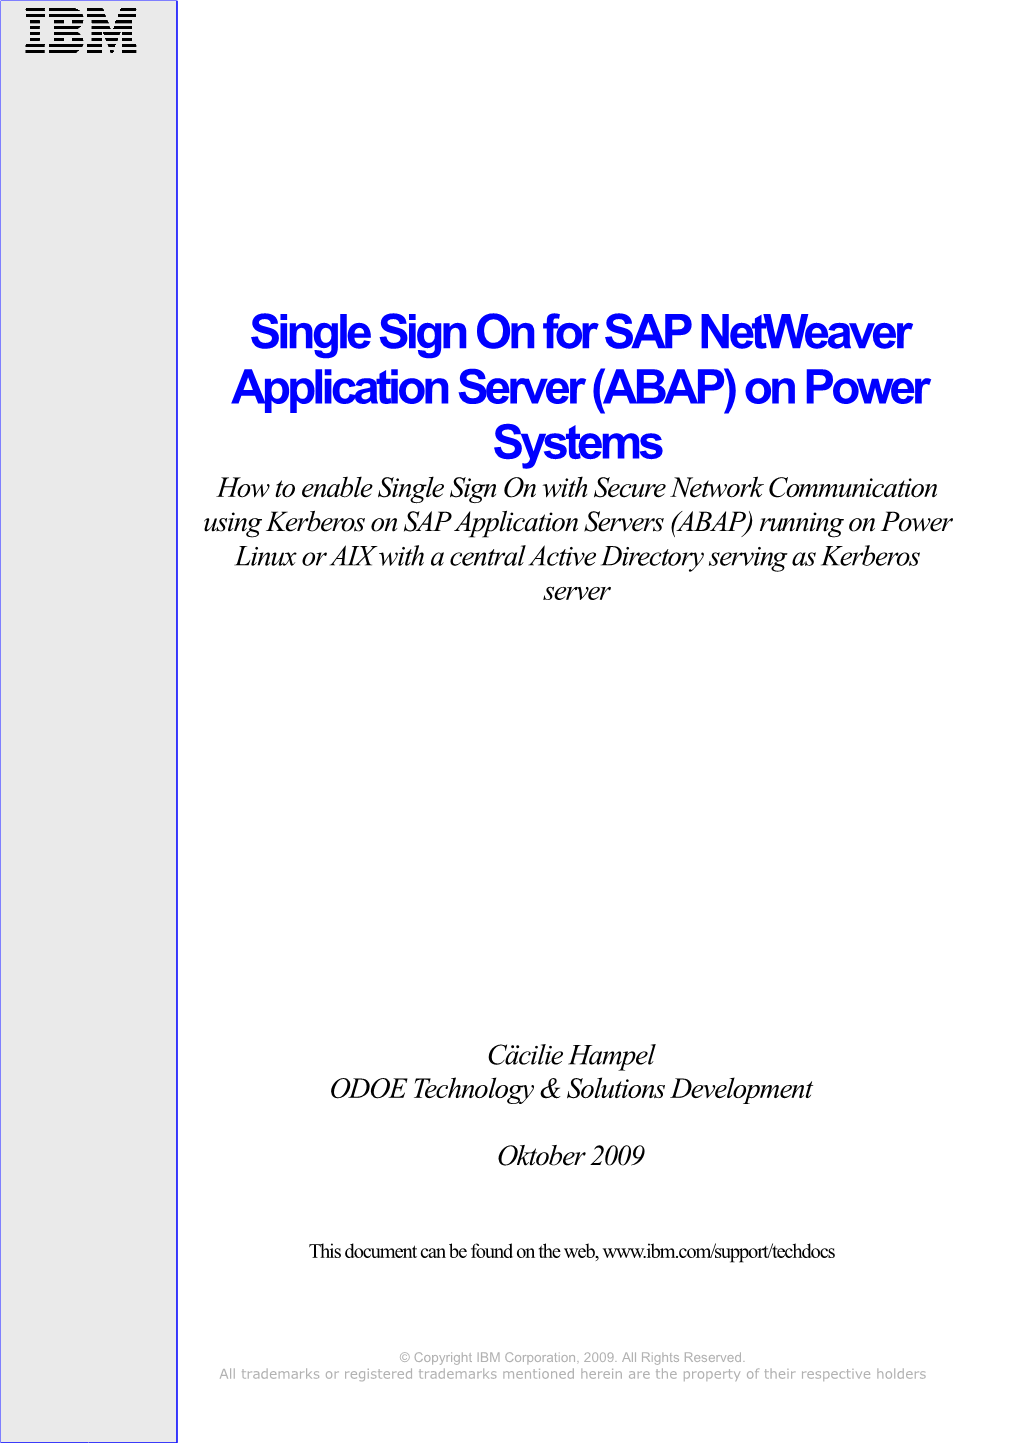 Single Sign on for SAP Netweaver Application Server (ABAP) On